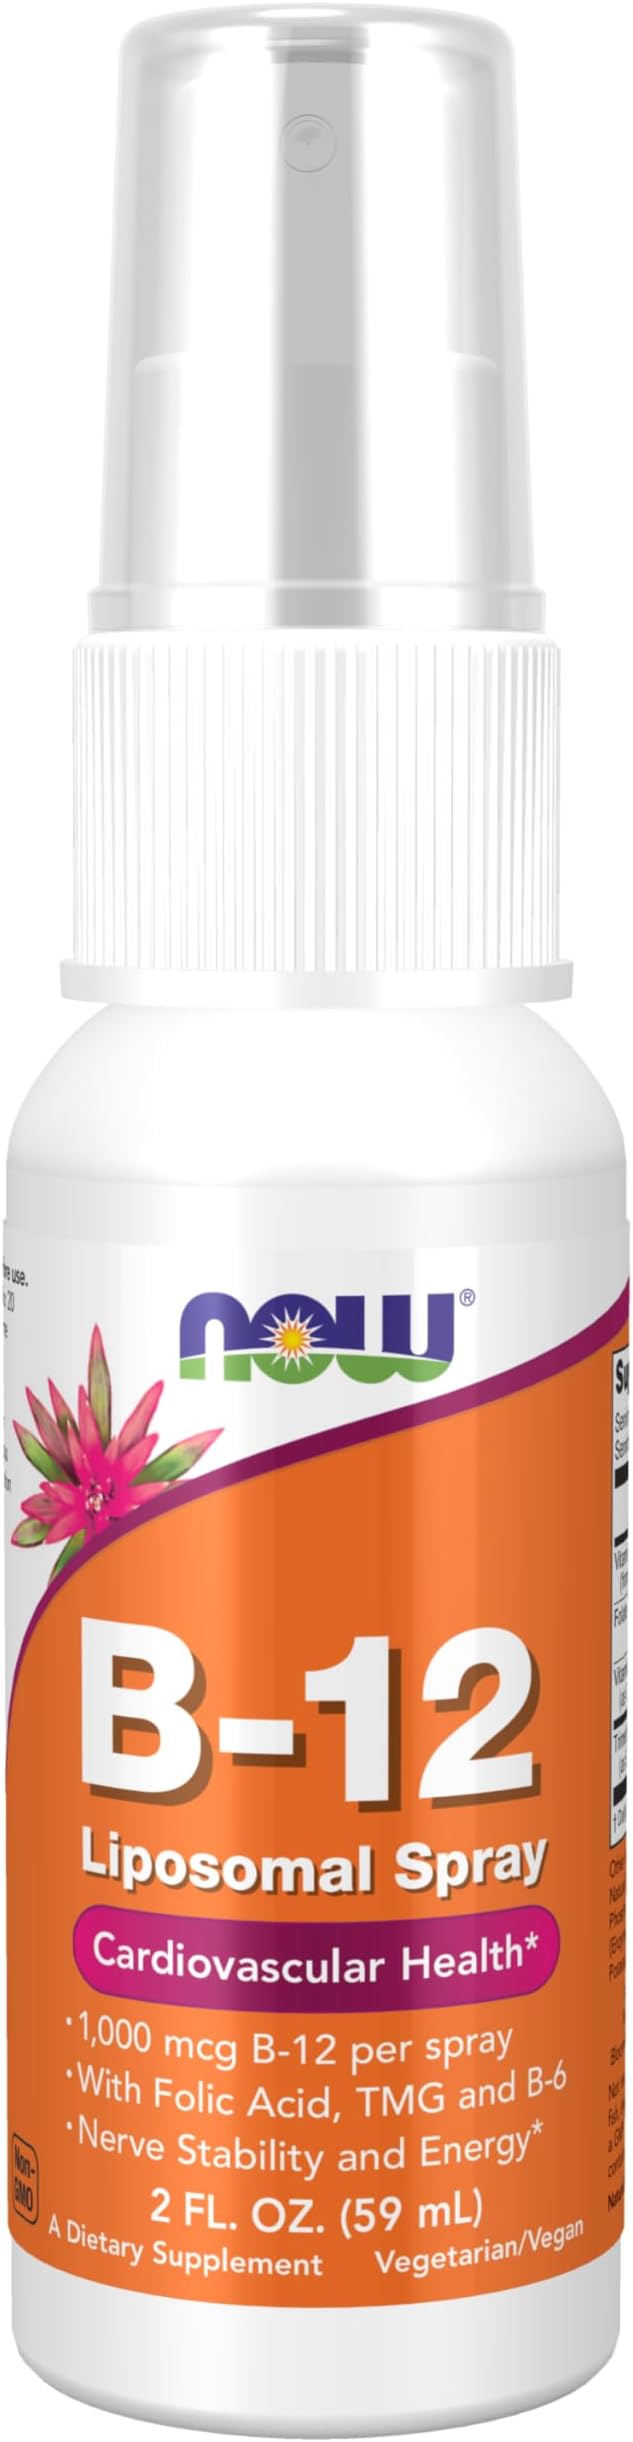 NOW Supplements, Vitamin B-12 Liposomal Spray with Folic Acid, TMG and B-6, 2-Ounce